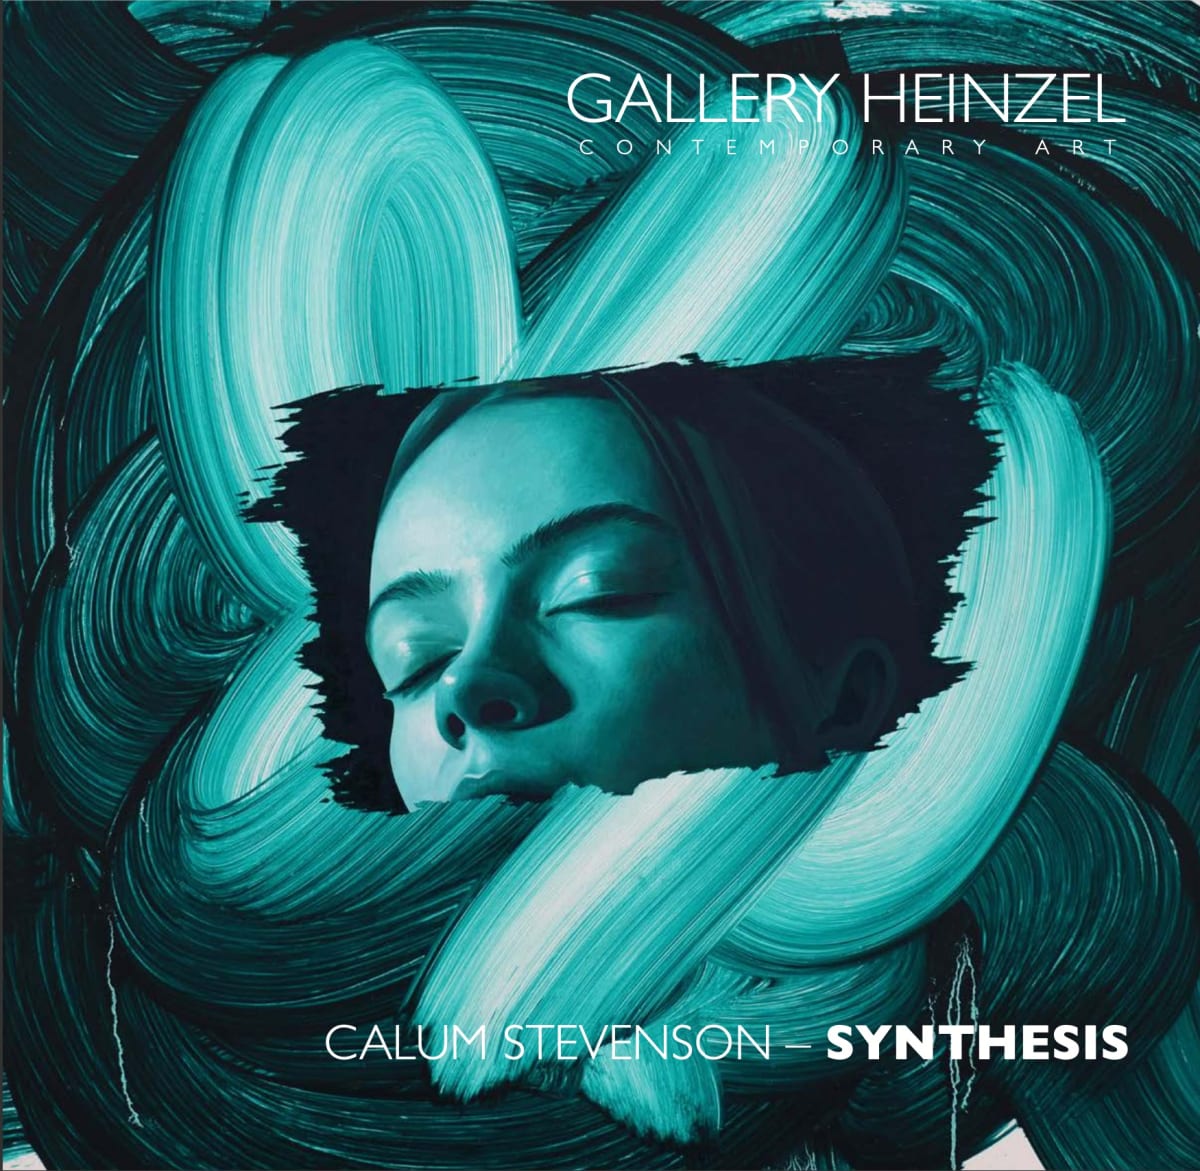 Gallery Heinzel presents CALUM STEVENSON - SYNTHESIS